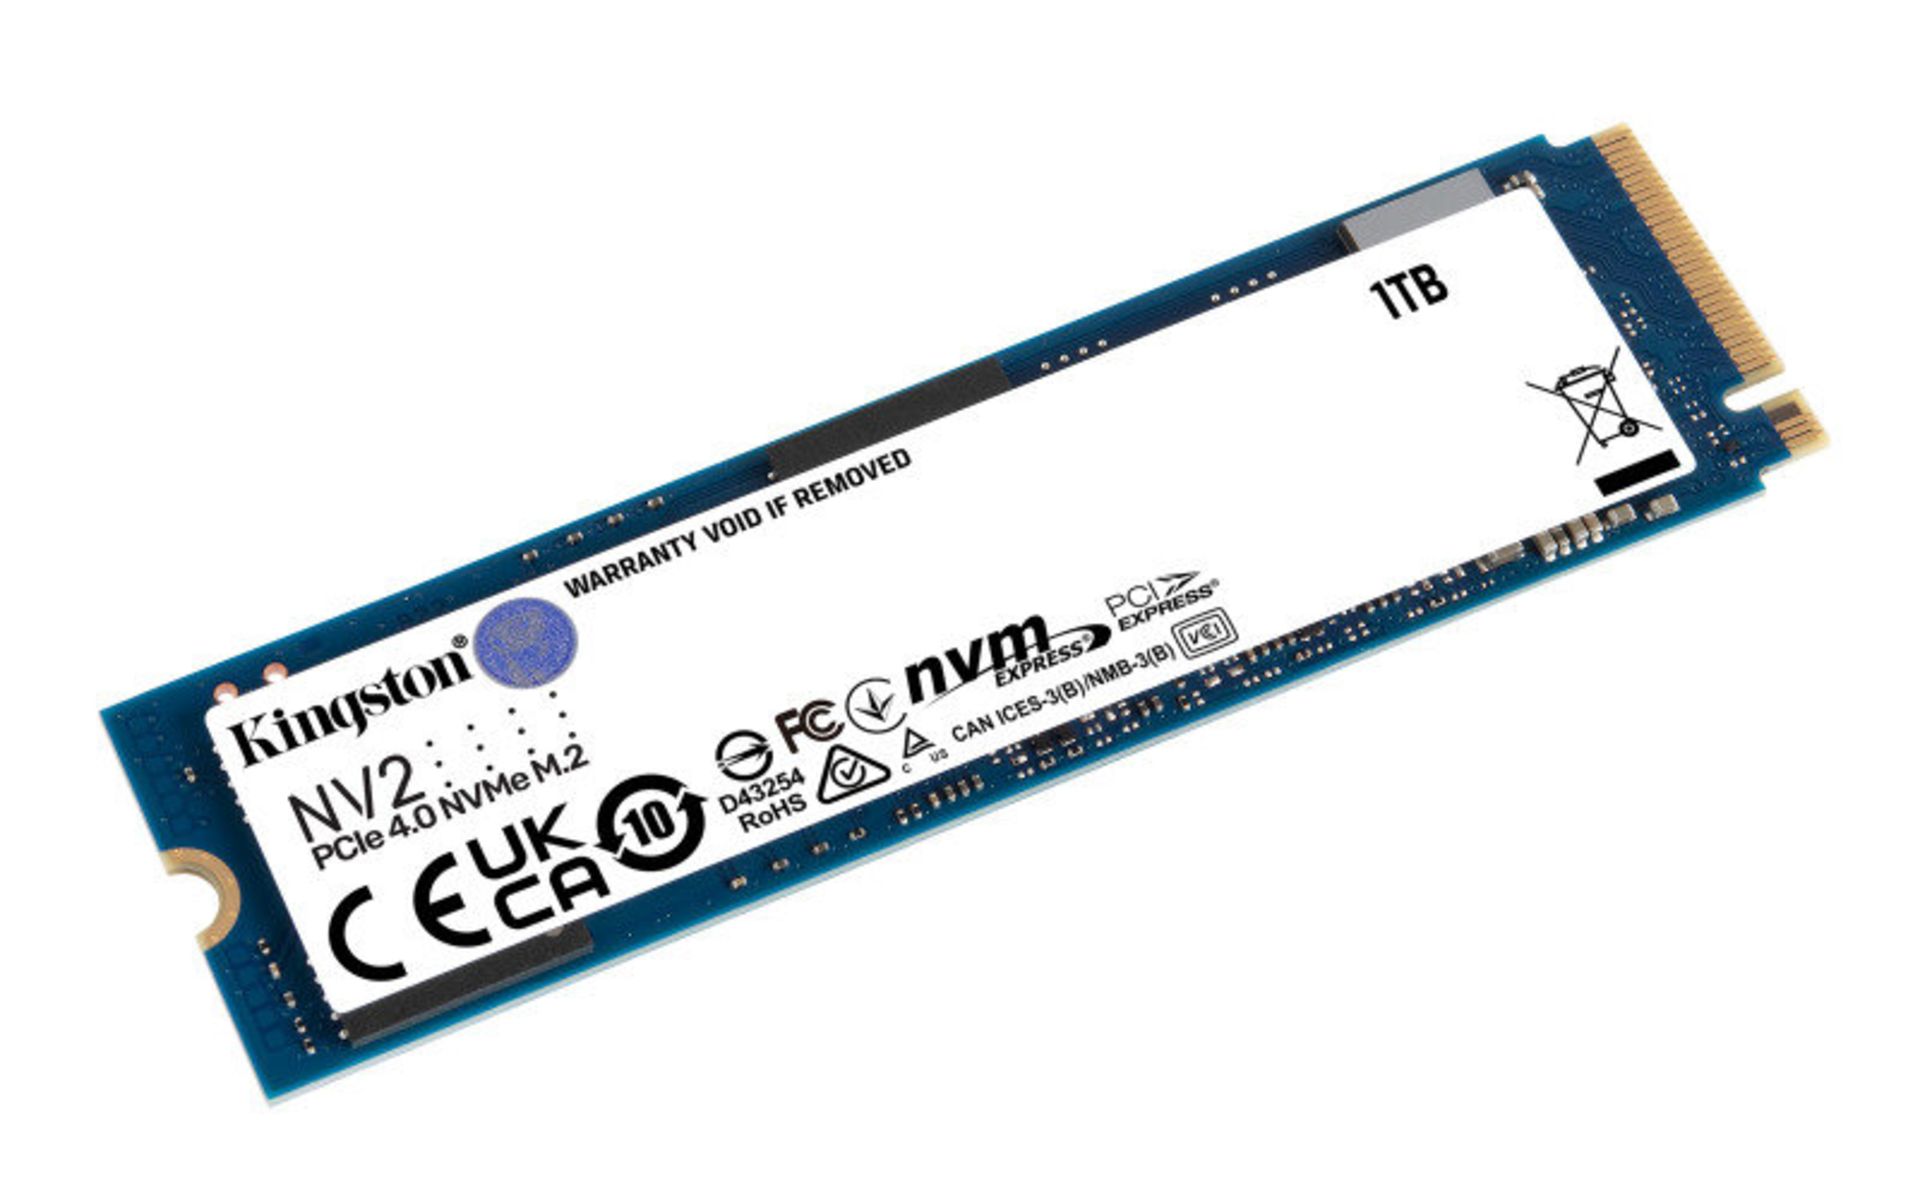 BRAND NEW FACTORY SEALED KINGSTON NV2 NVMe PCIe 4.0 Internal SSD 1TB M.2 2280. RRP £69.99.